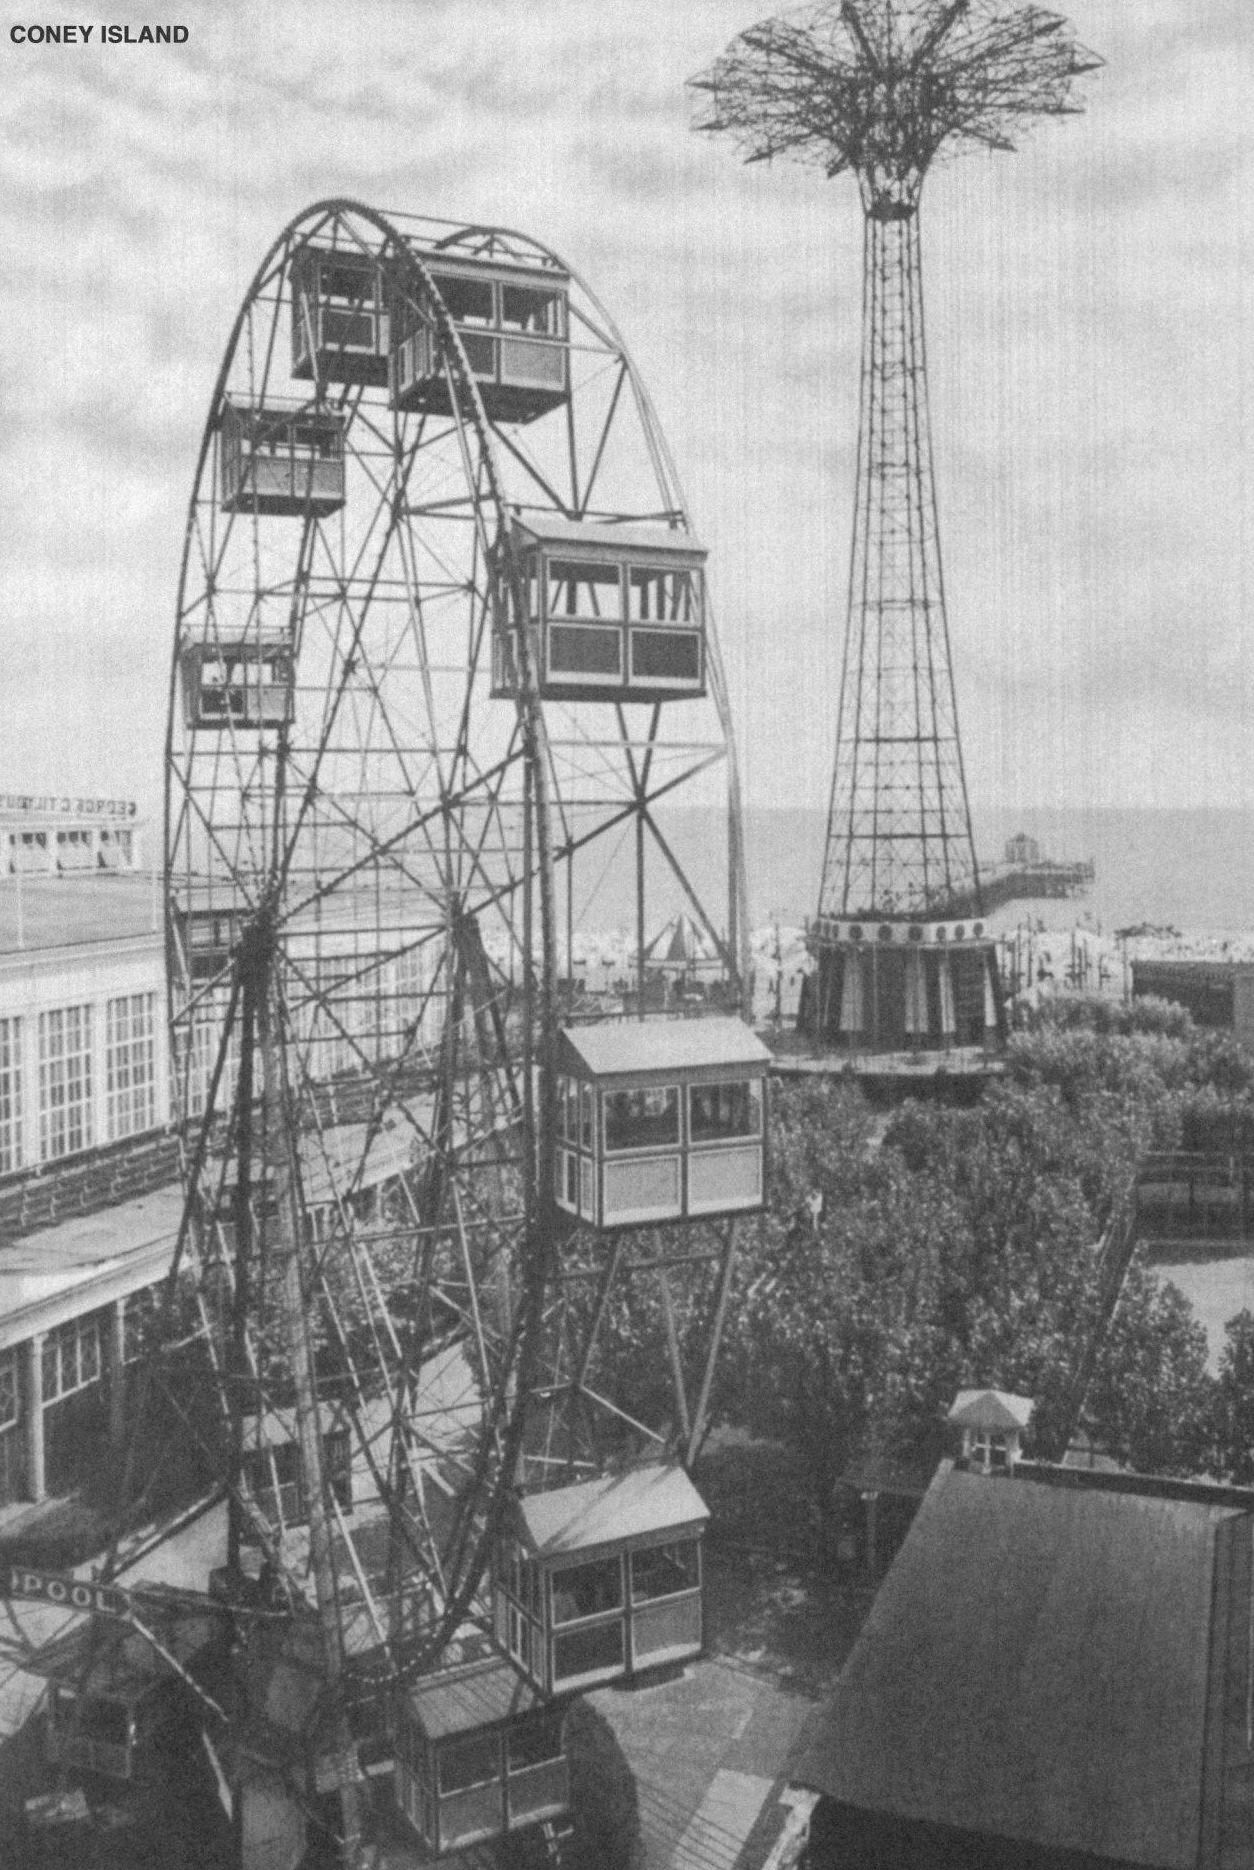 Throngs At Coney Island Amusement Park, Circa 1900